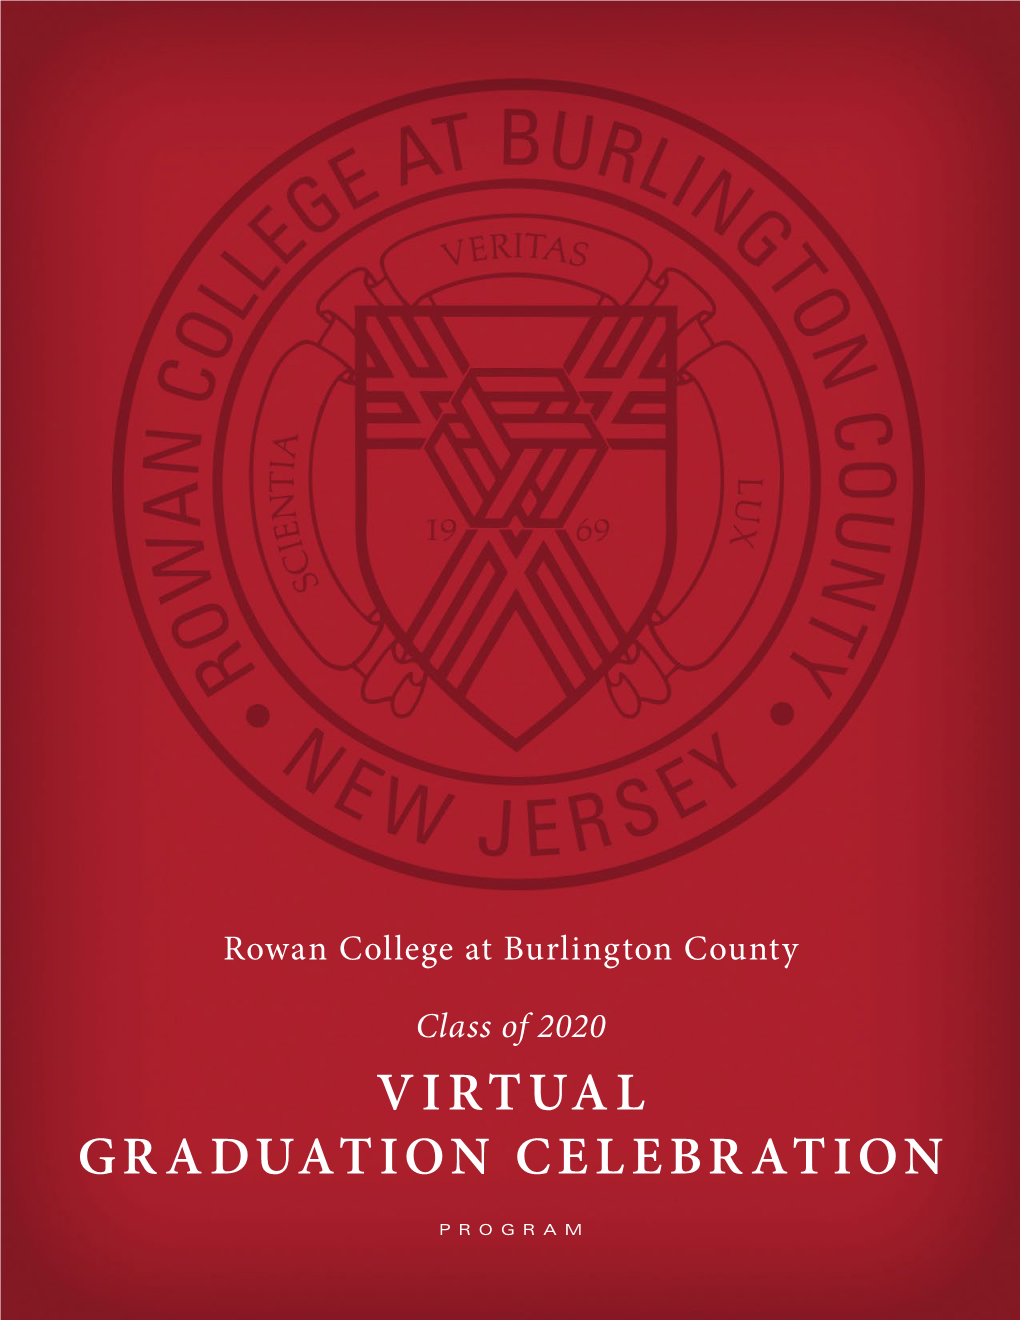 Virtual Graduation Celebration